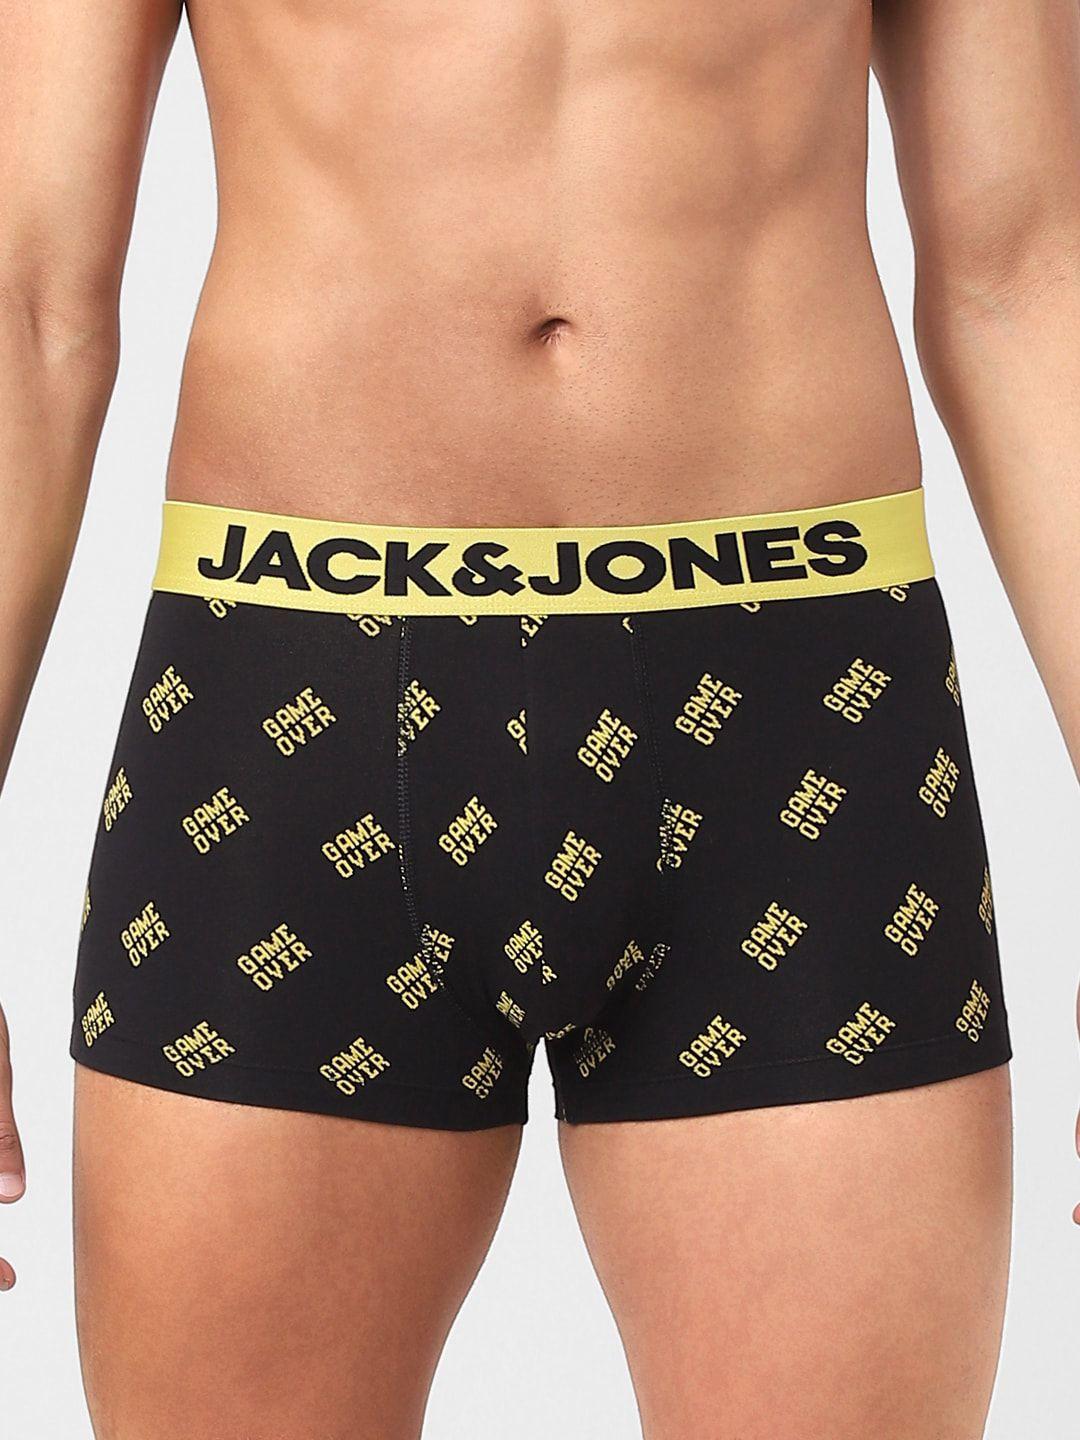 jack & jones men black & yellow printed cotton trunks